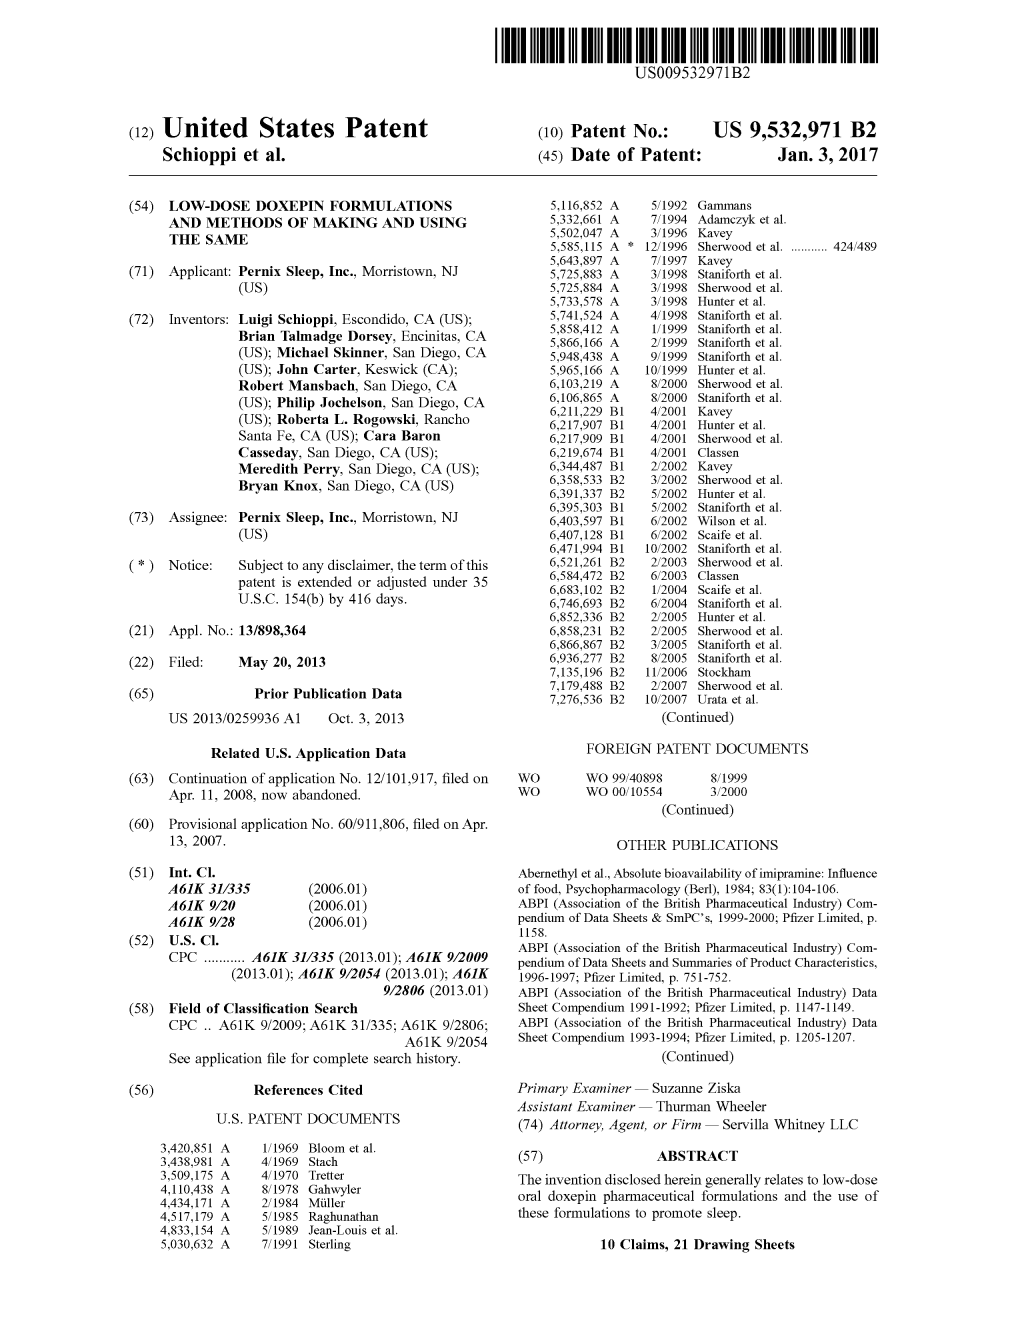 (12) United States Patent (10) Patent No.: US 9,532.971 B2 Schioppi Et Al